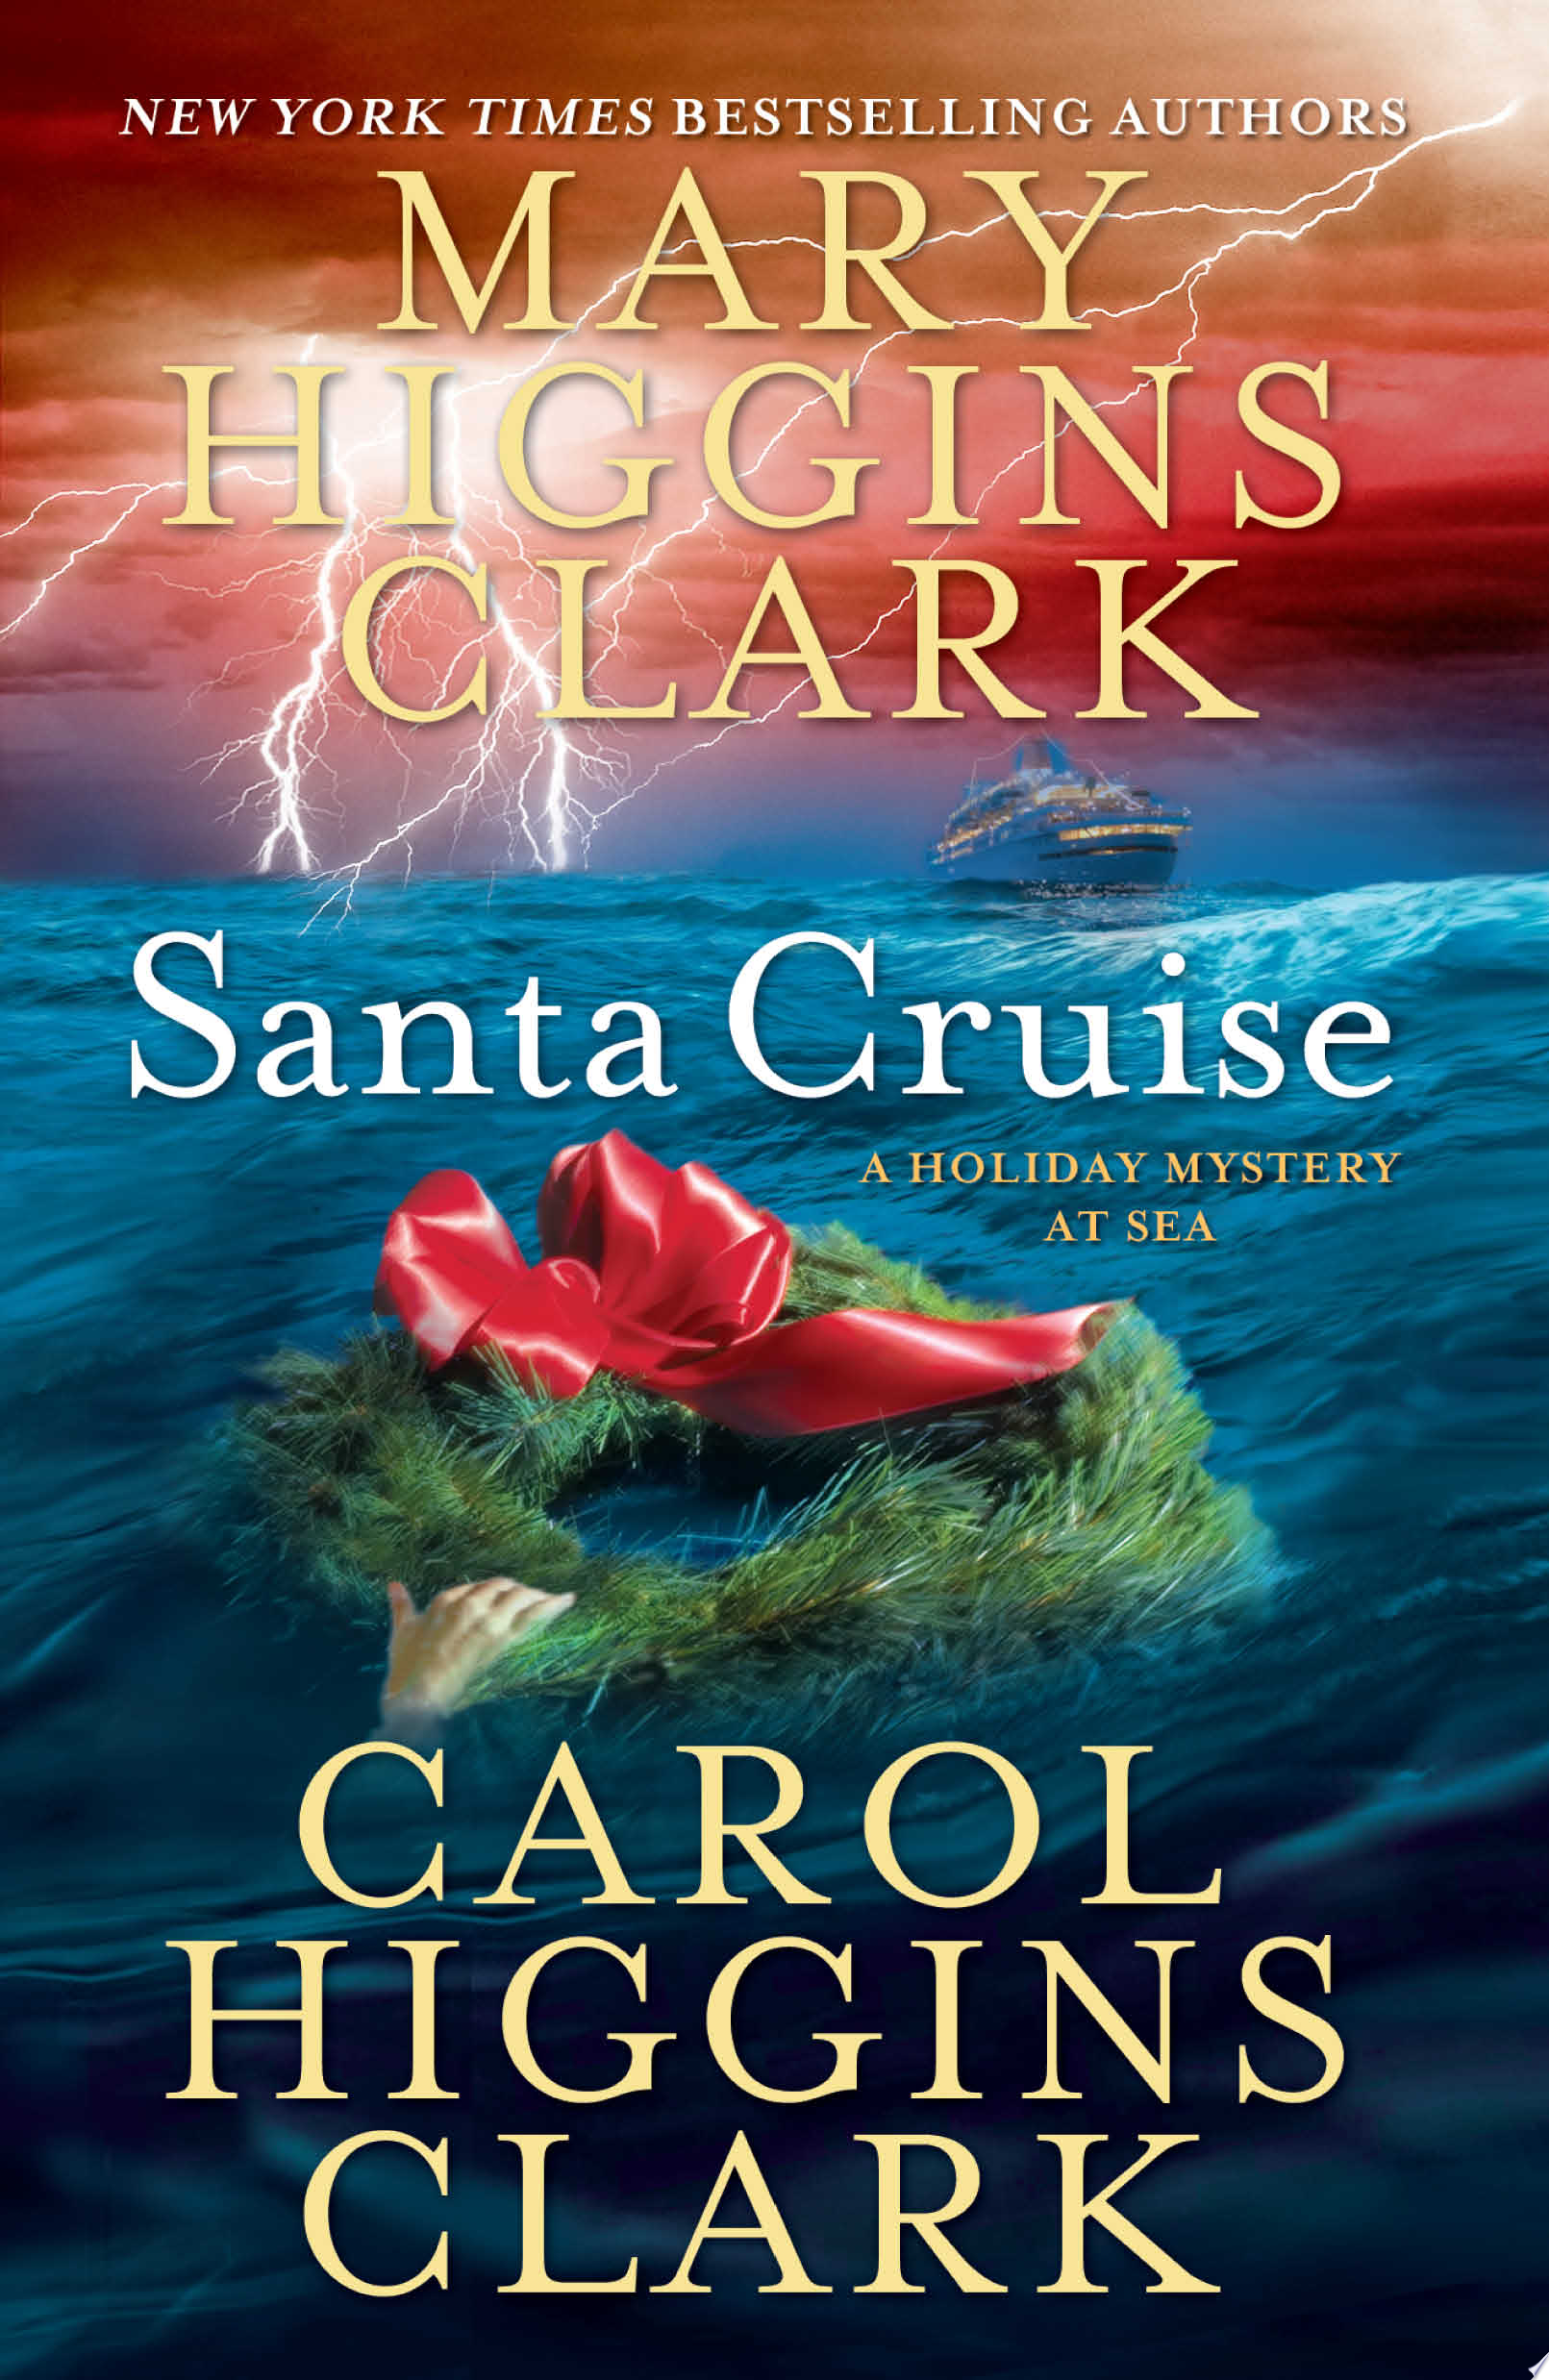 Image for "Santa Cruise"